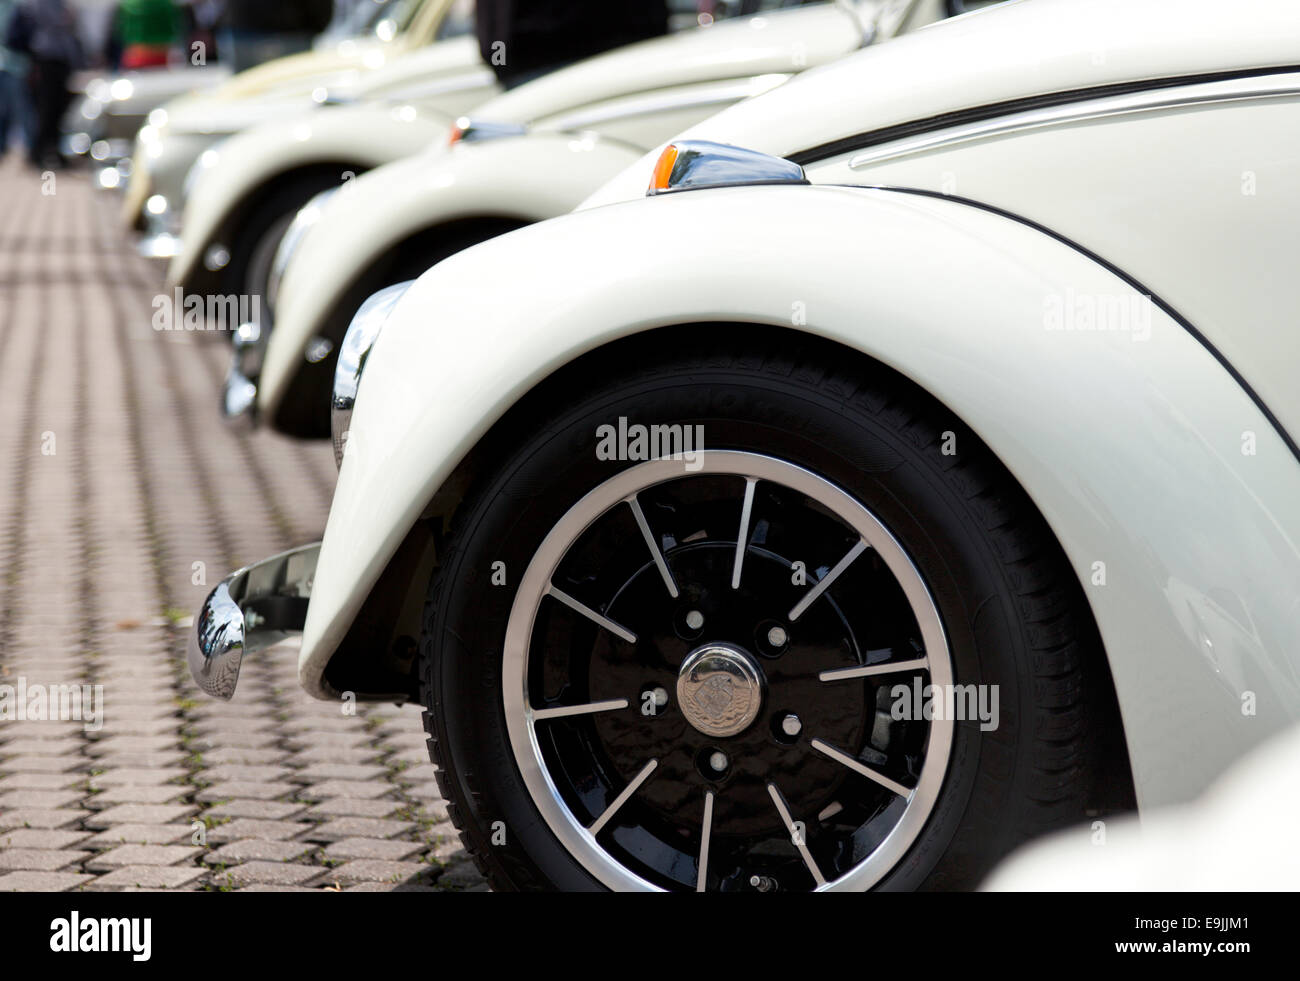 Row of vintage Volkswagen Beetle cars, closeup of fender and Porsche design wheel, shallow depth of field Stock Photo